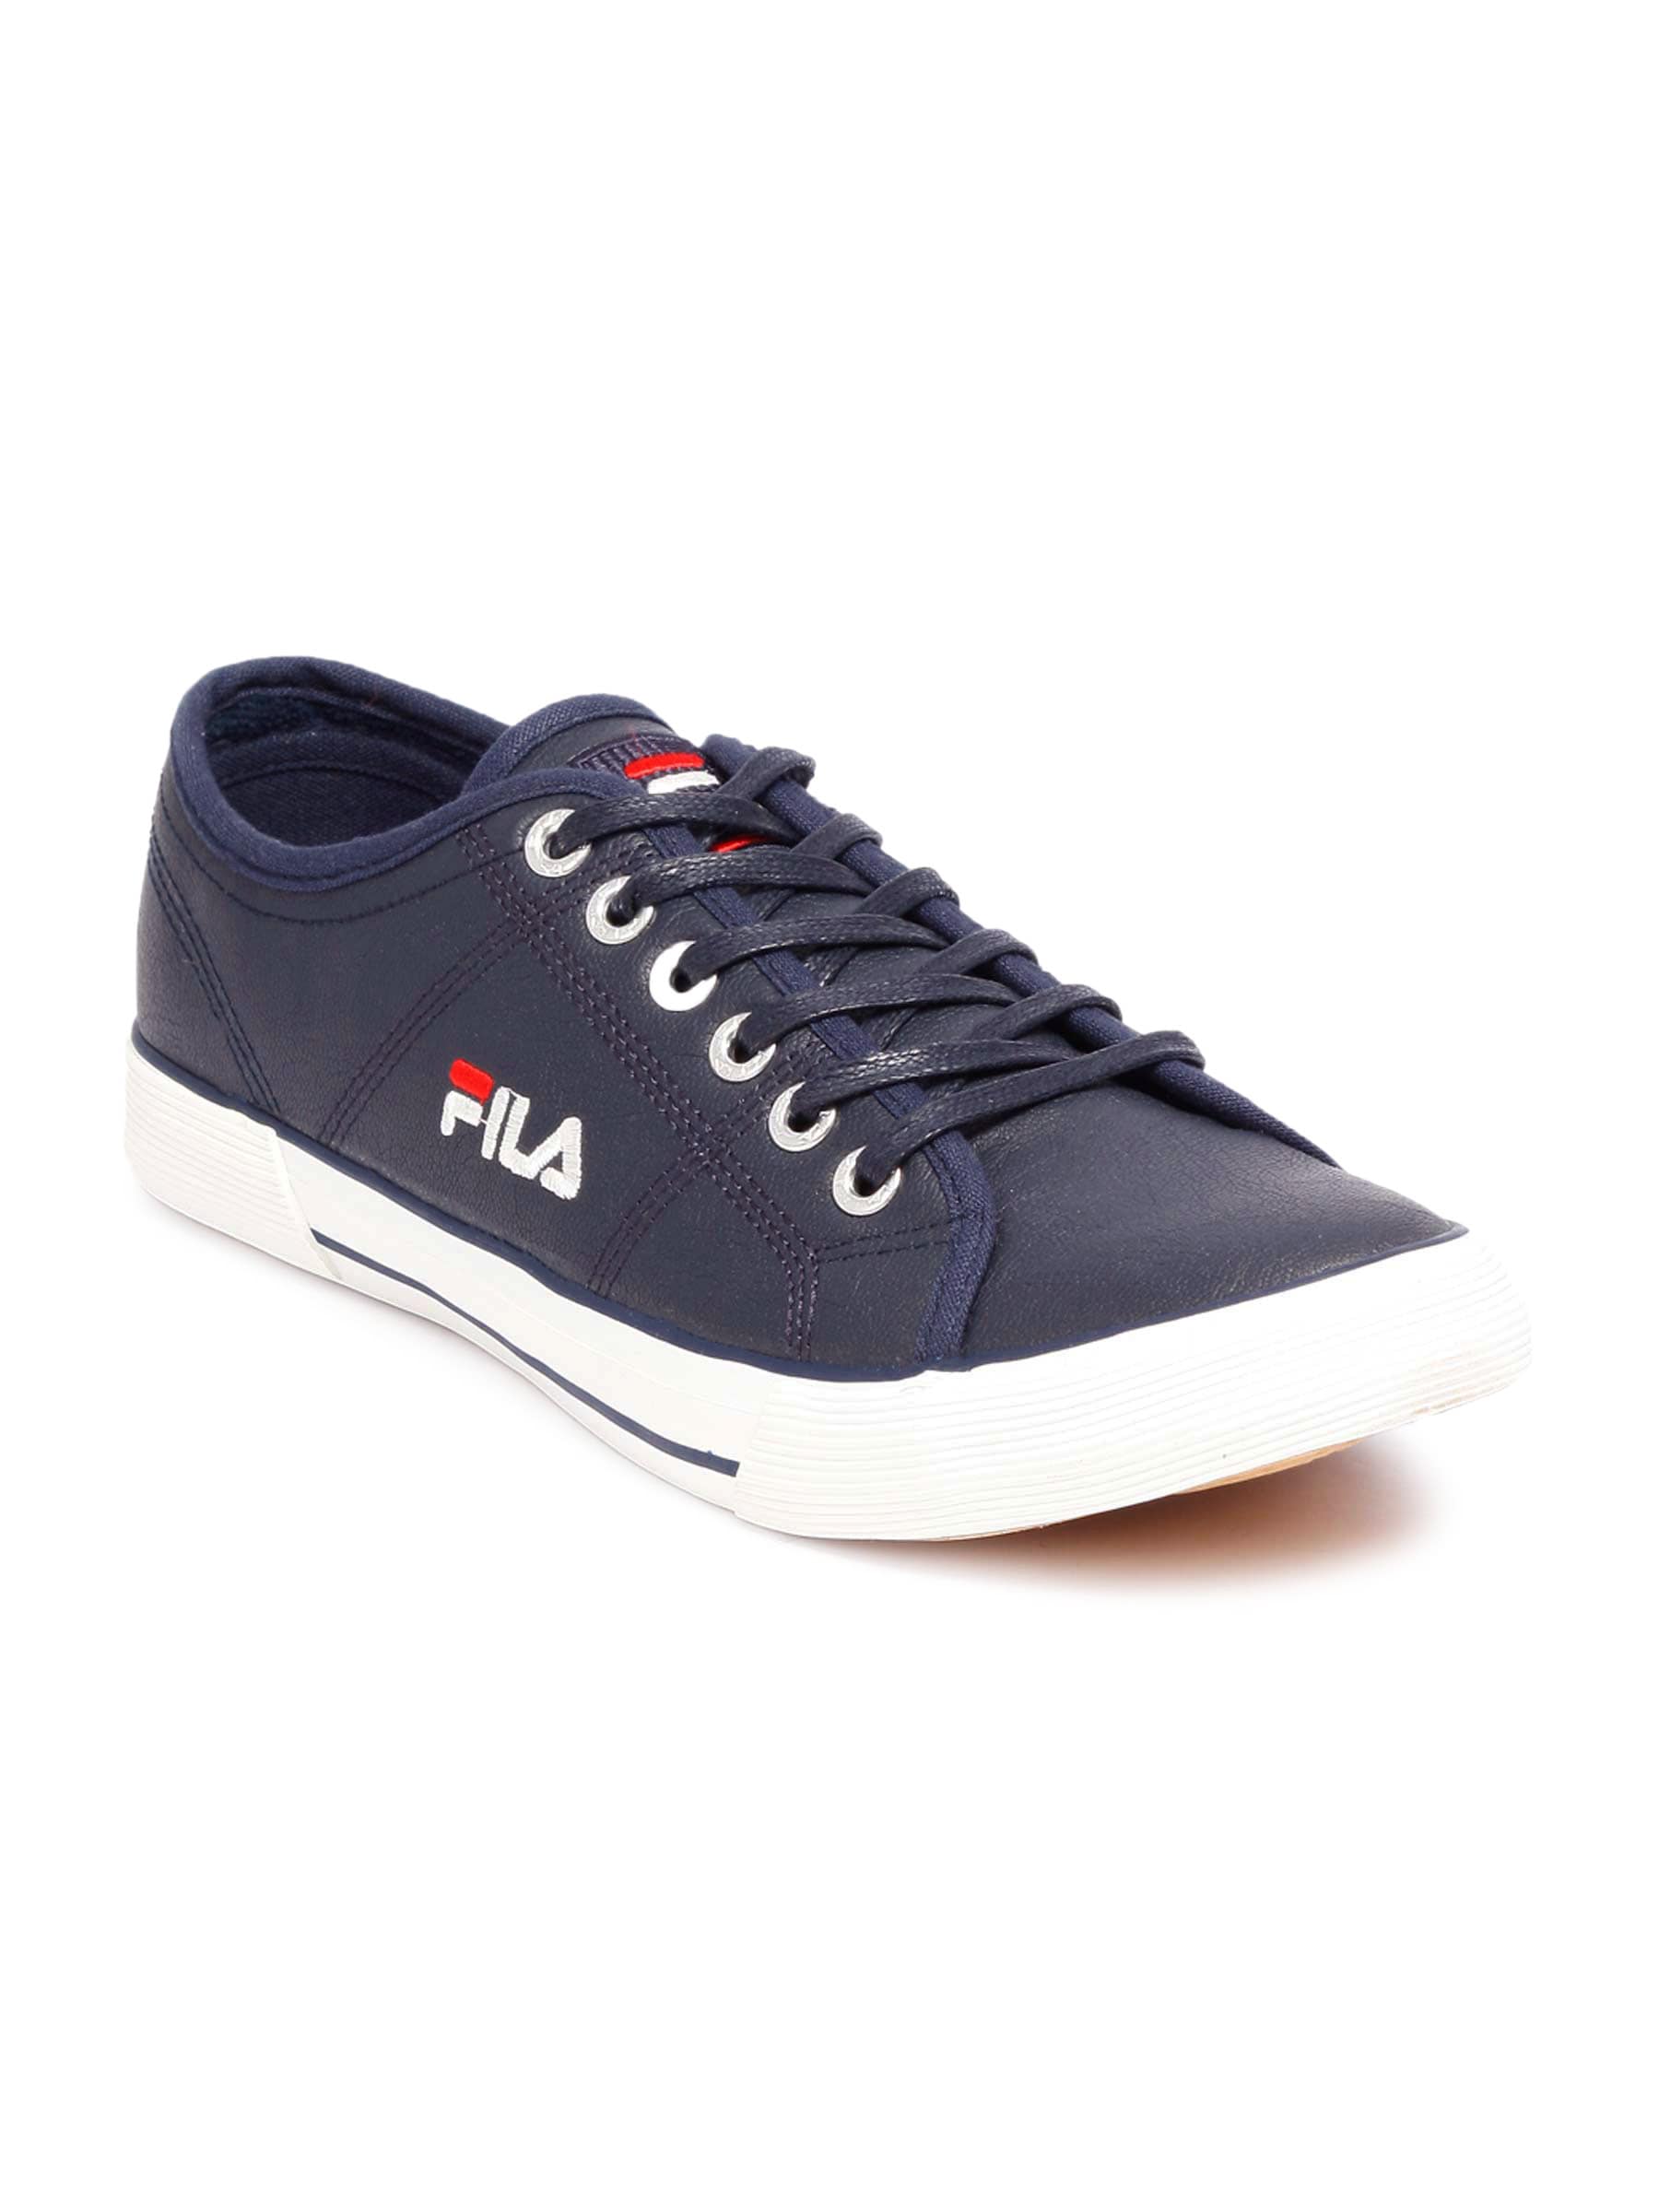 Fila Men Lobato Navy Blue Casual Shoes